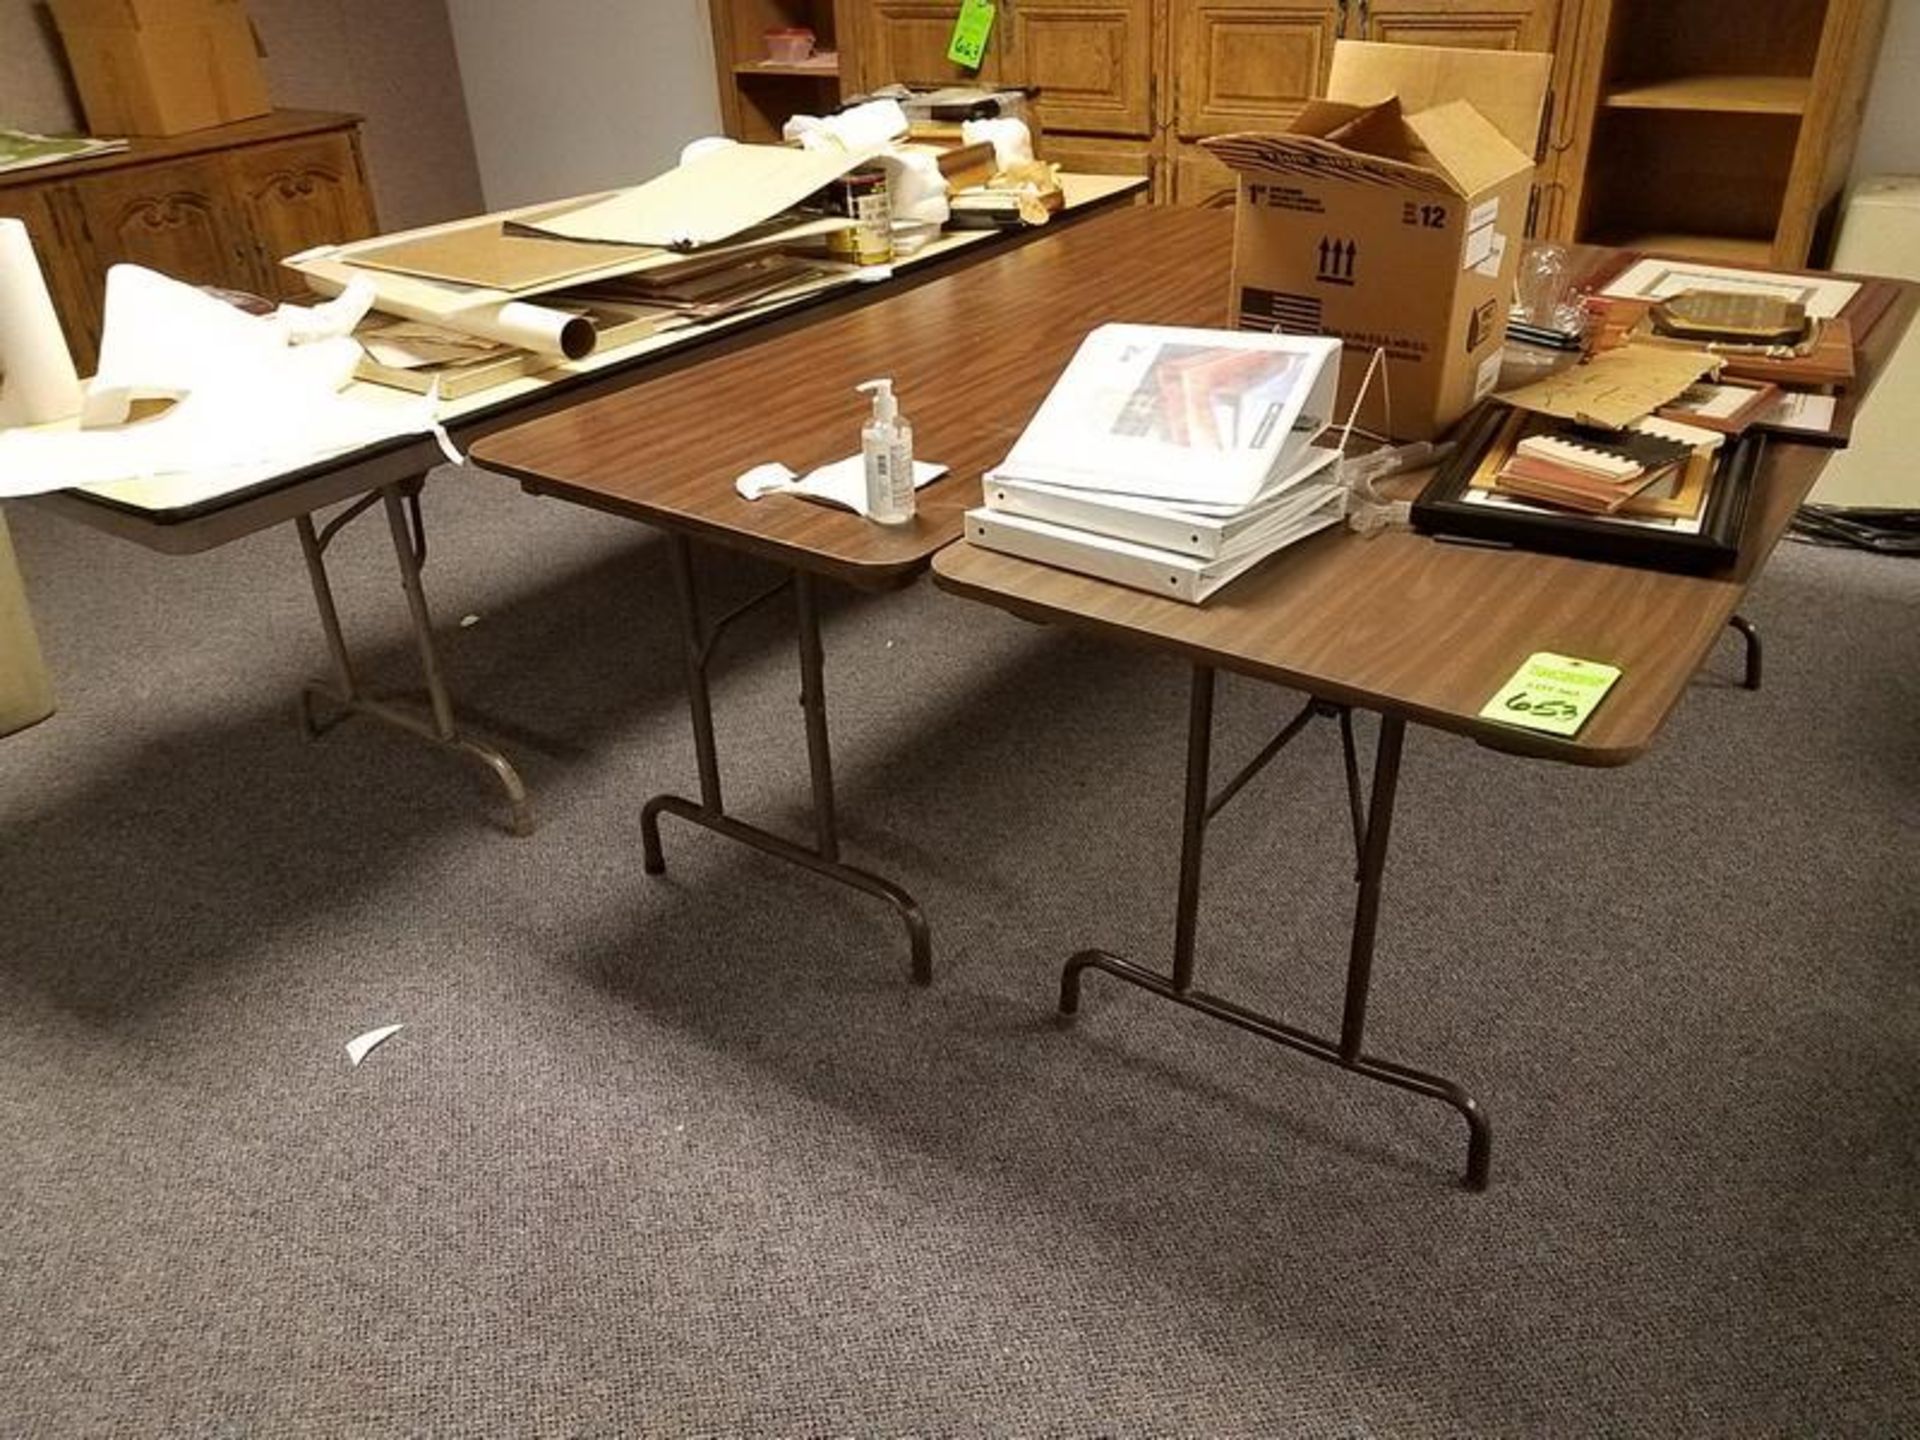 Lot (3) Assorted Folding Tables, No Contents